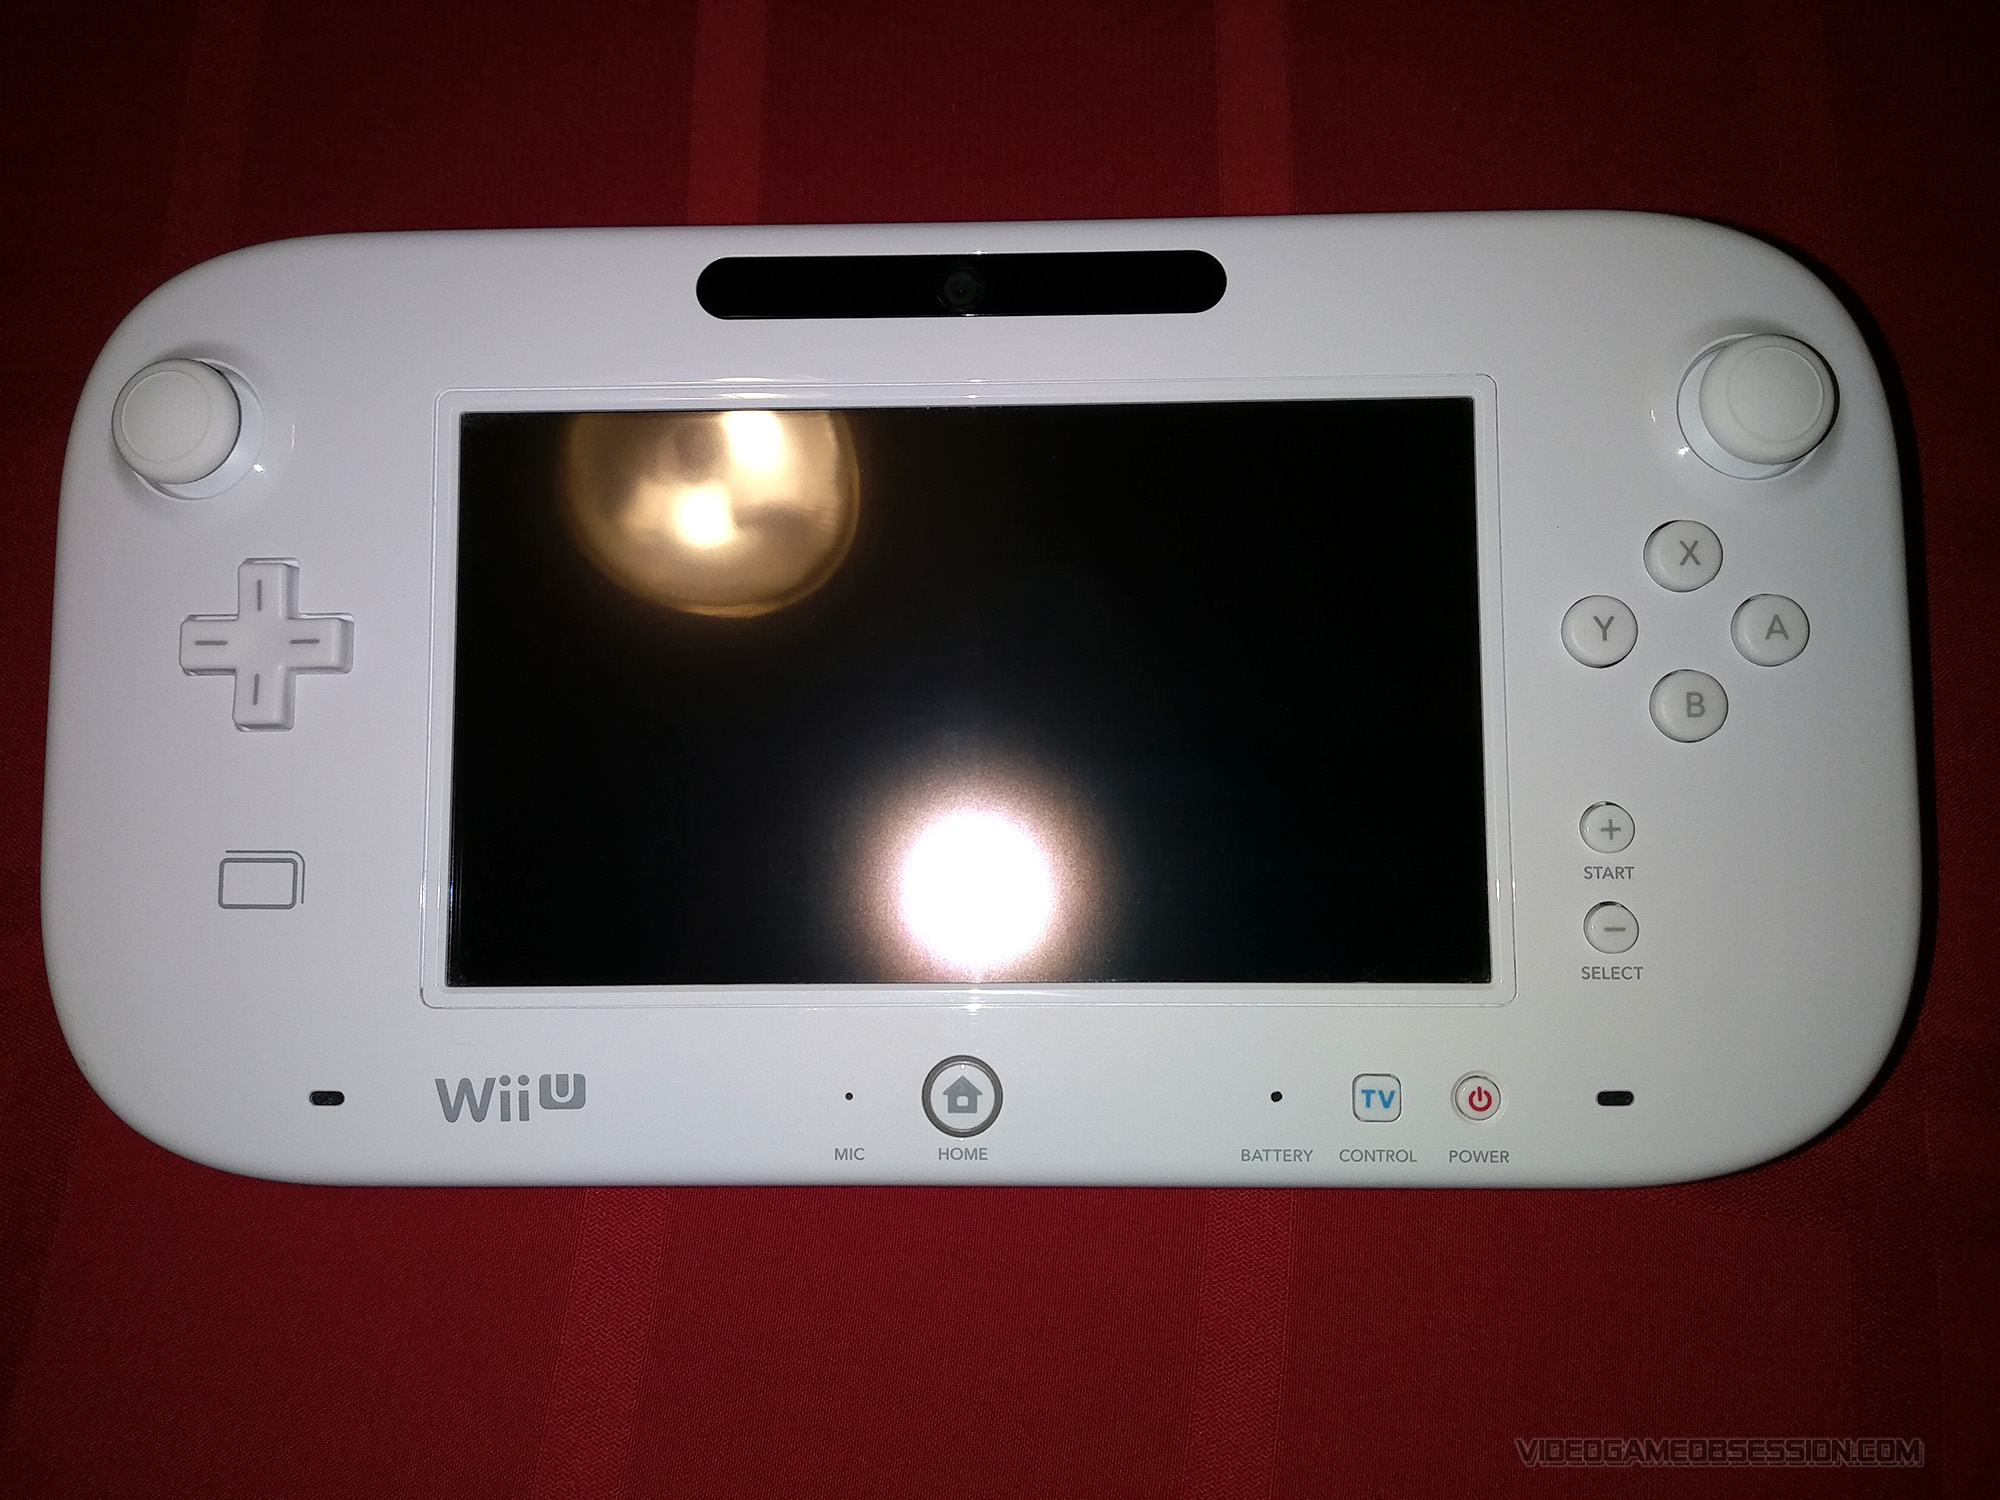 Wii U 8GB White Console with Nintendo GamePad - Sam's Club